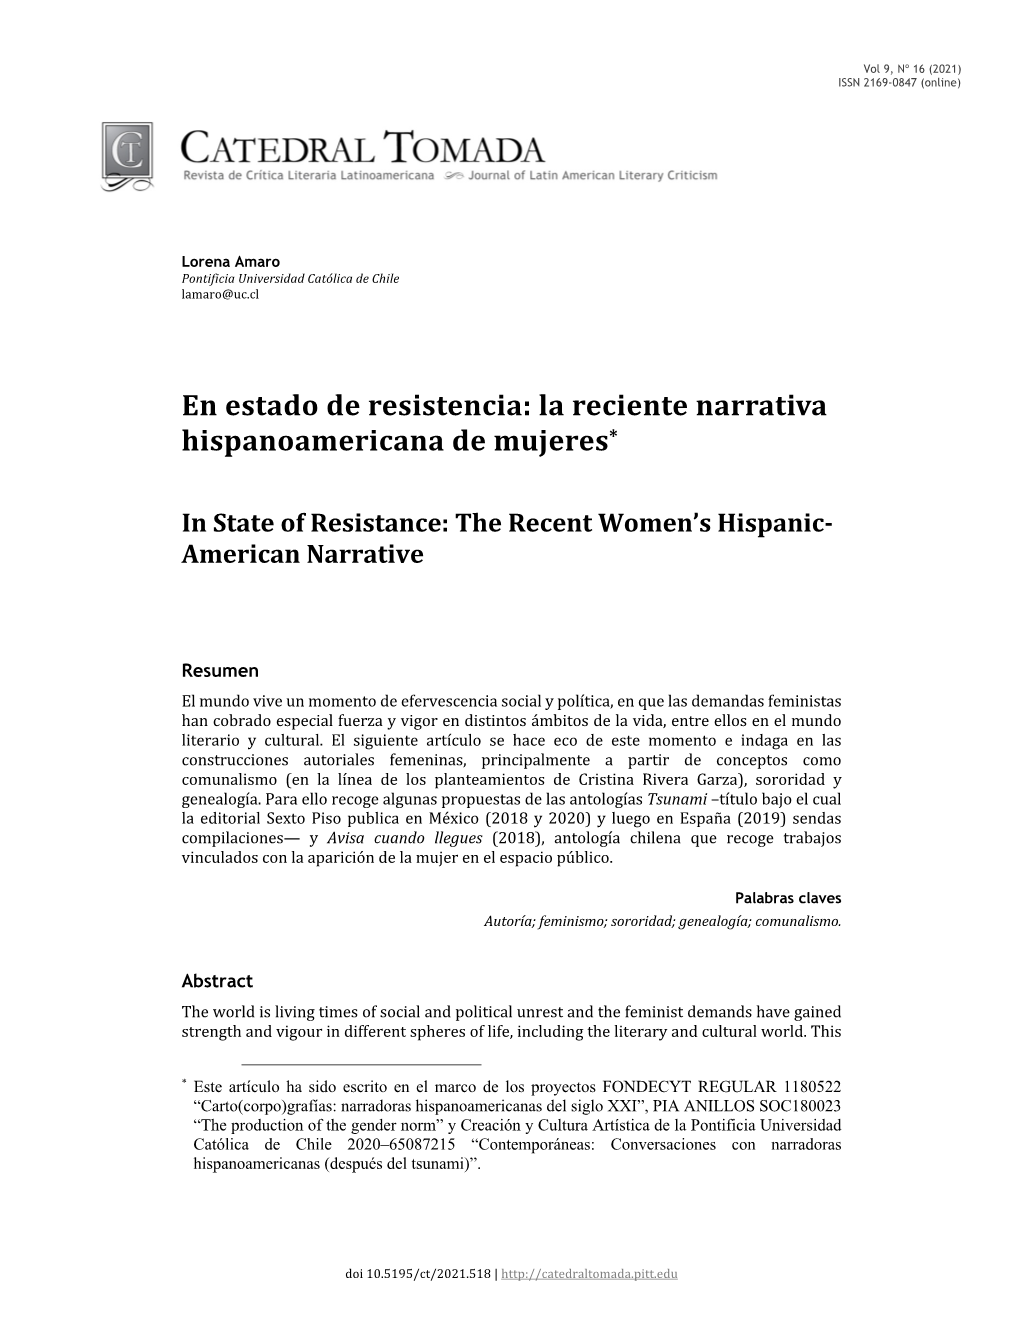 La Reciente Narrativa Hispanoamericana De Mujeres*